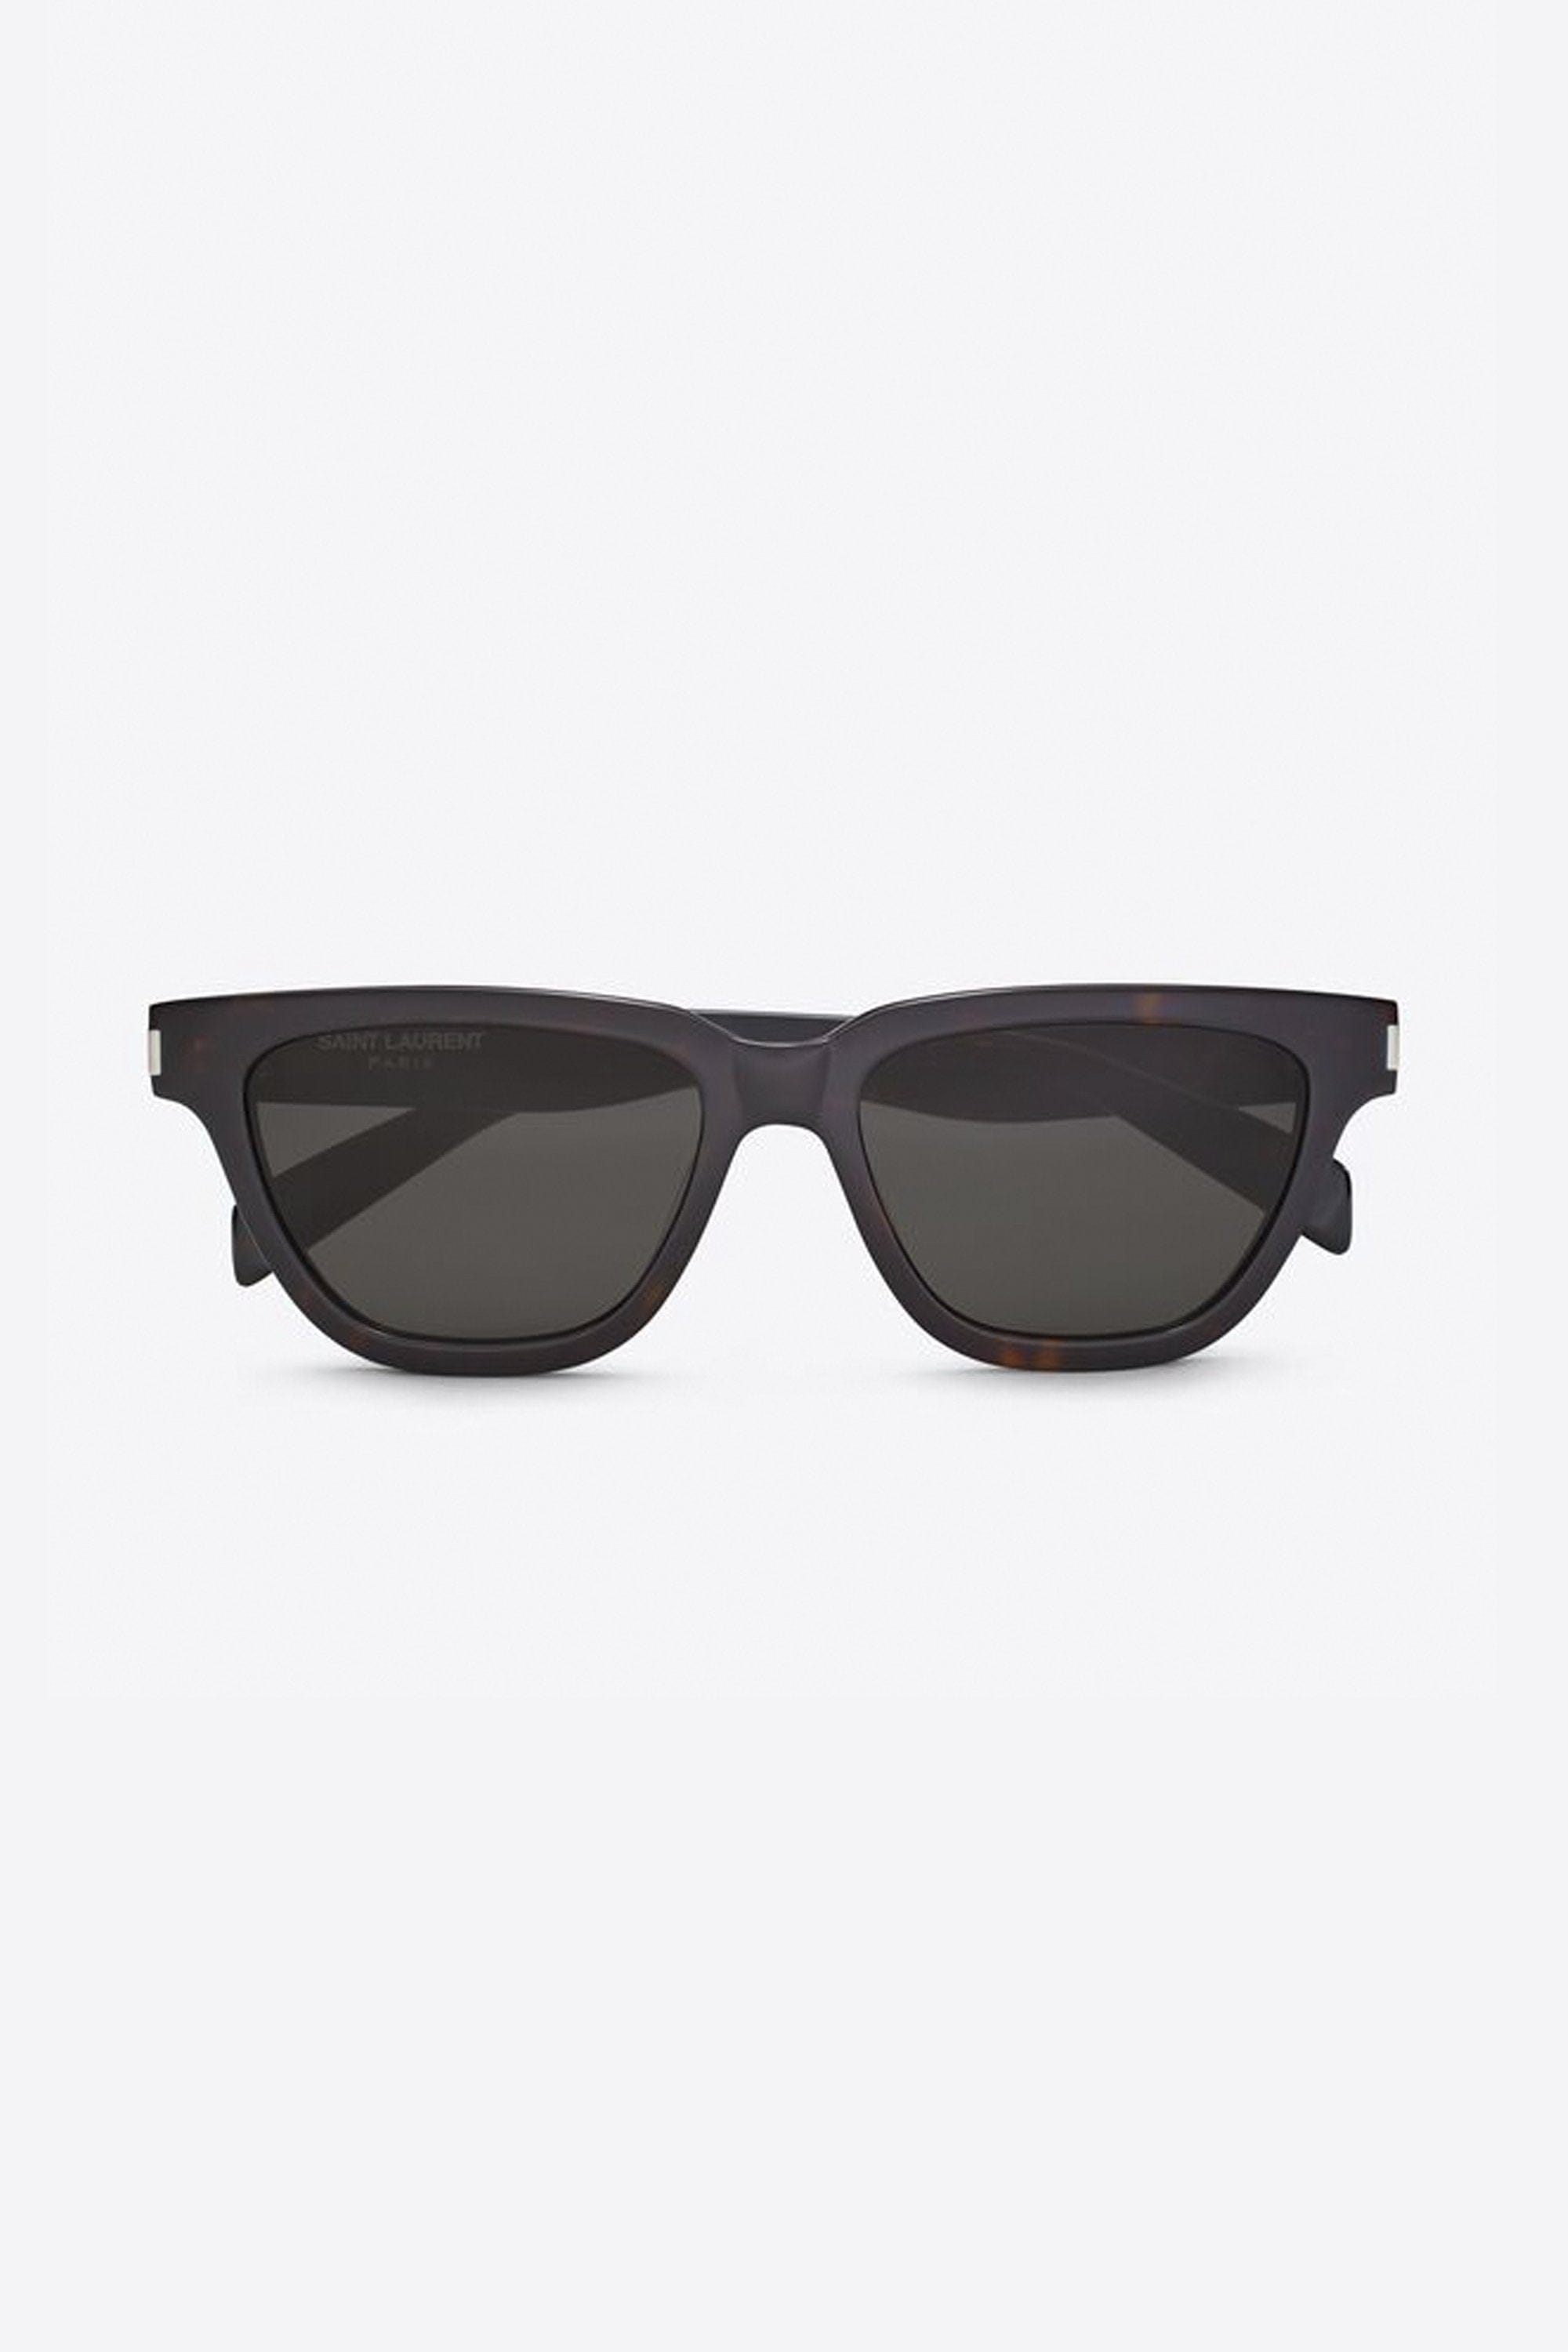 Saint Laurent SL SULPICE 462 cat-eye UNISEX sunglasses with grey lenses - Eyewear Club